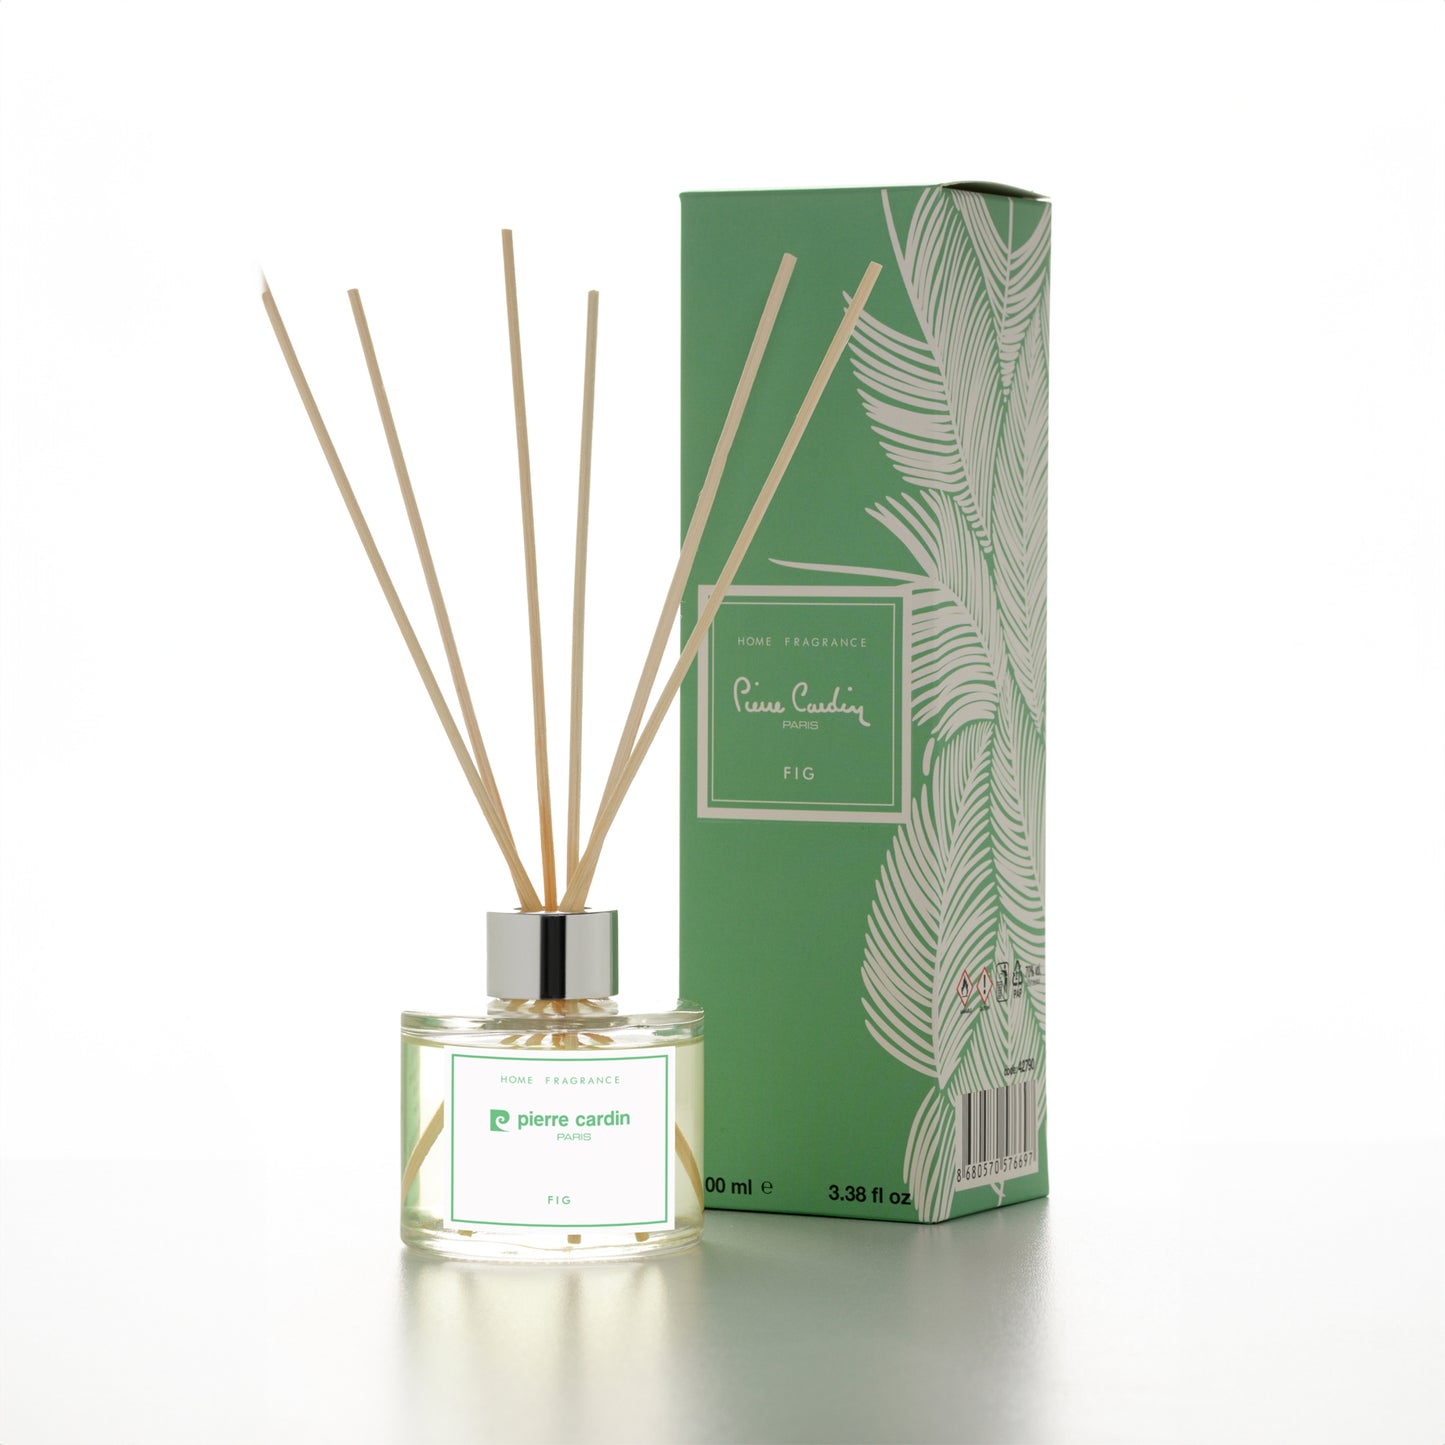 Pierre Cardin Home Fragrance - FIG 100 ml